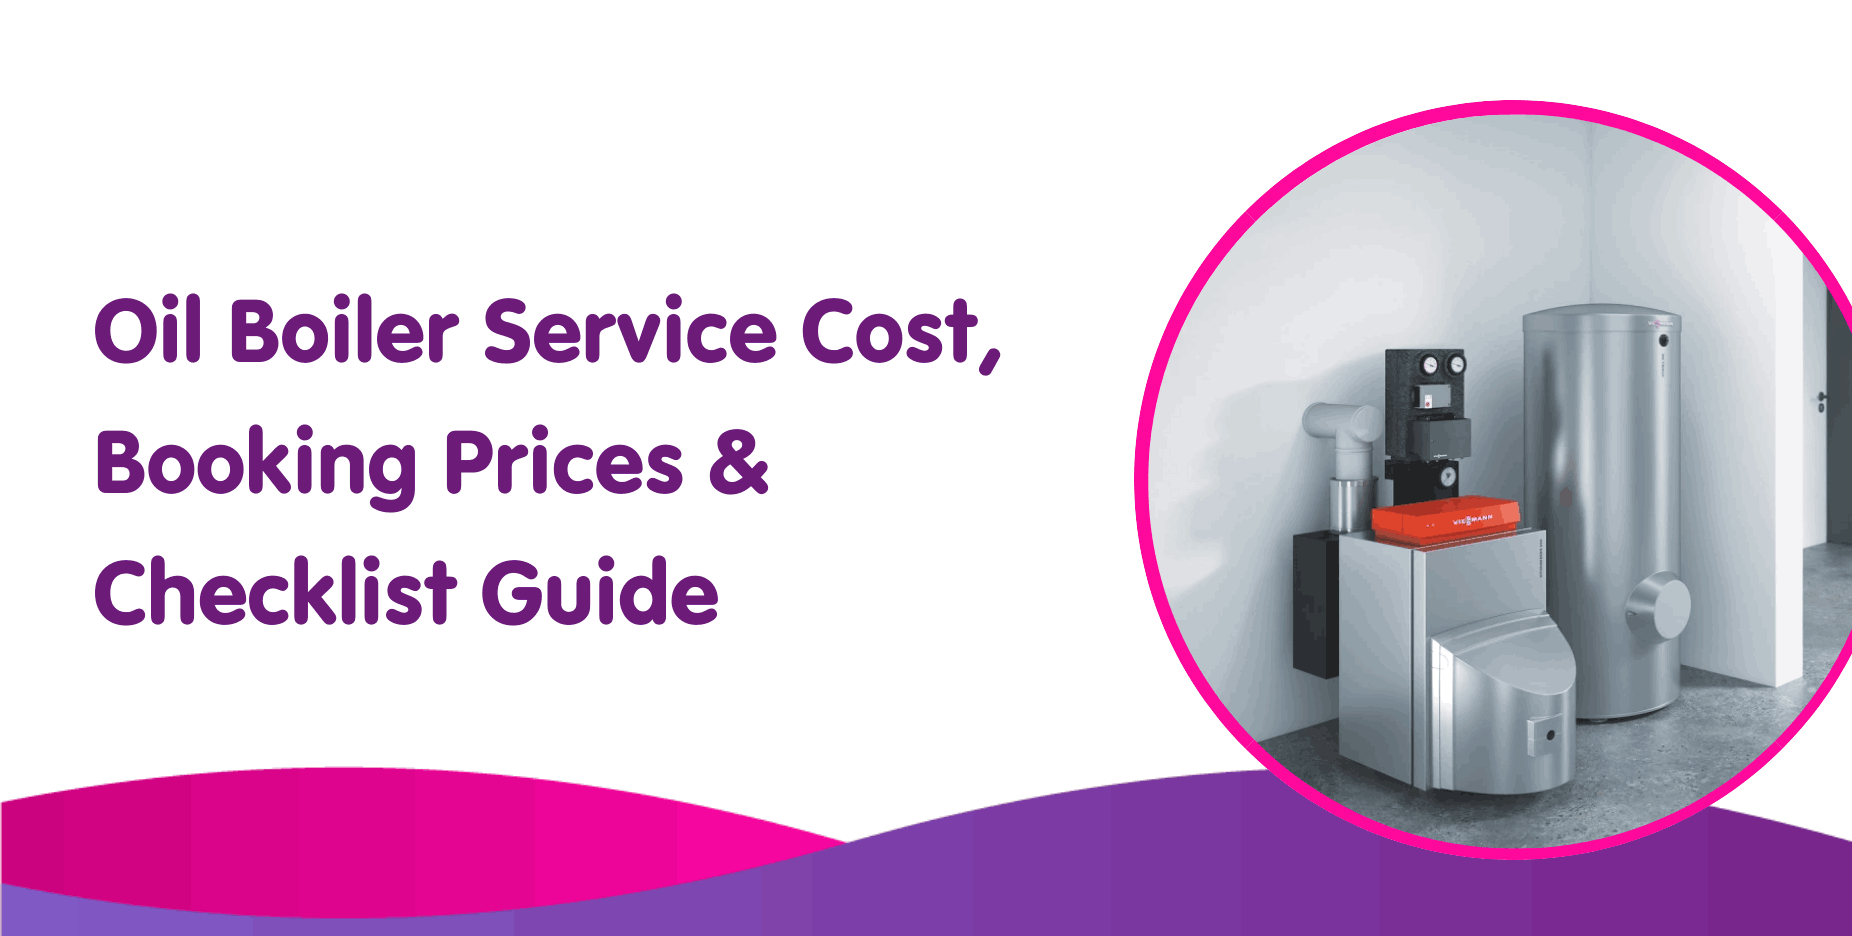 Oil Boiler Service Cost, Booking Prices & Checklist Guide